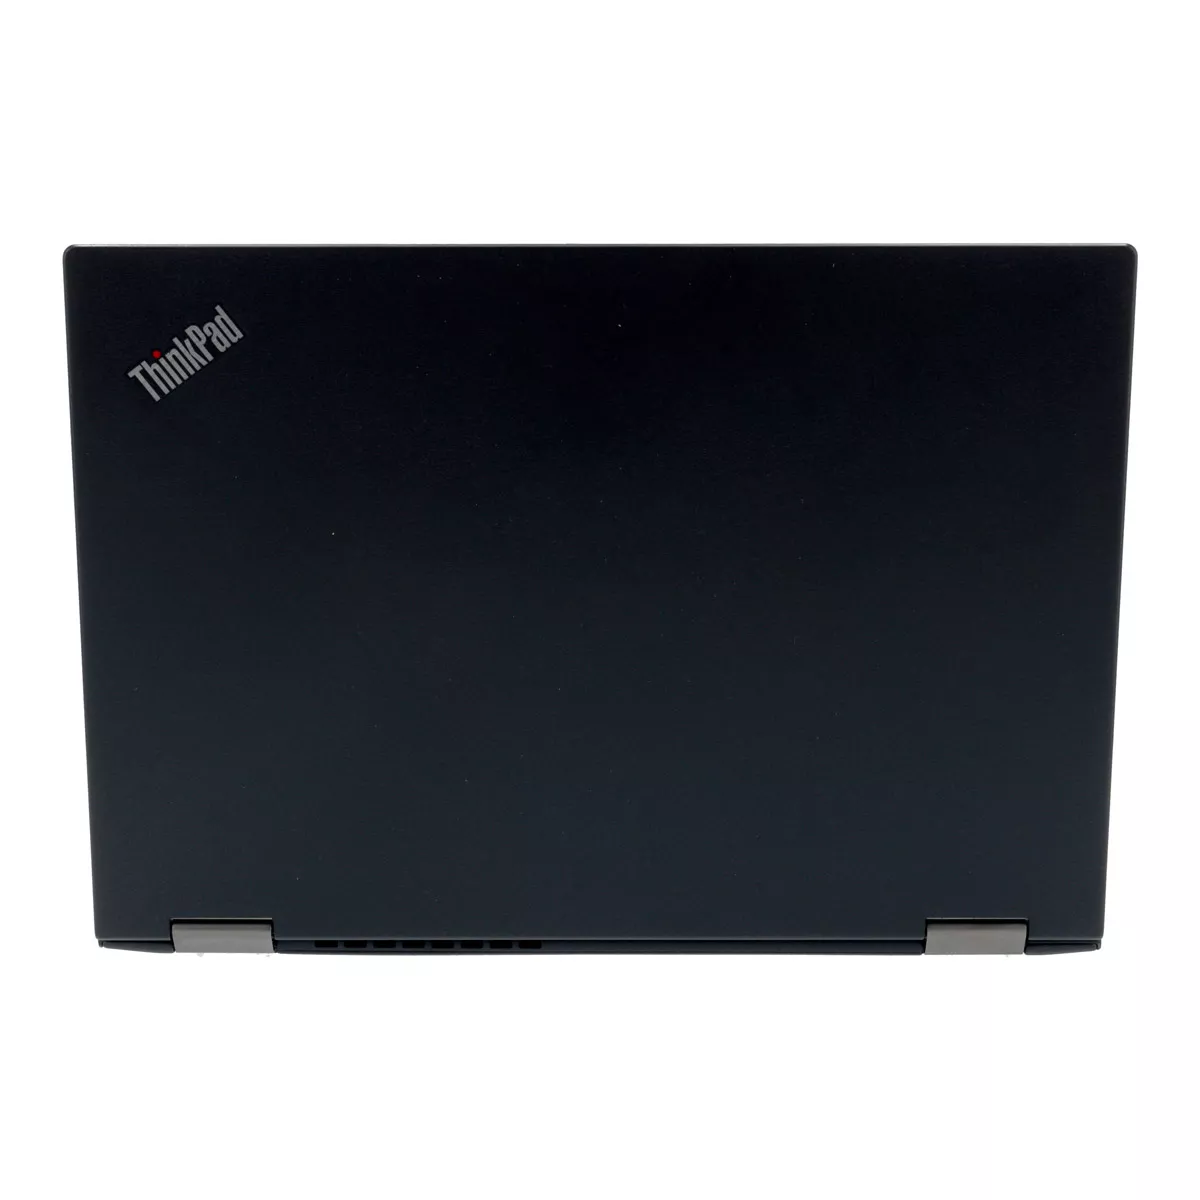 Lenovo ThinkPad X390 Yoga Core i5 8365U Touch 8 GB 240 GB M.2 nVME SSD Webcam A